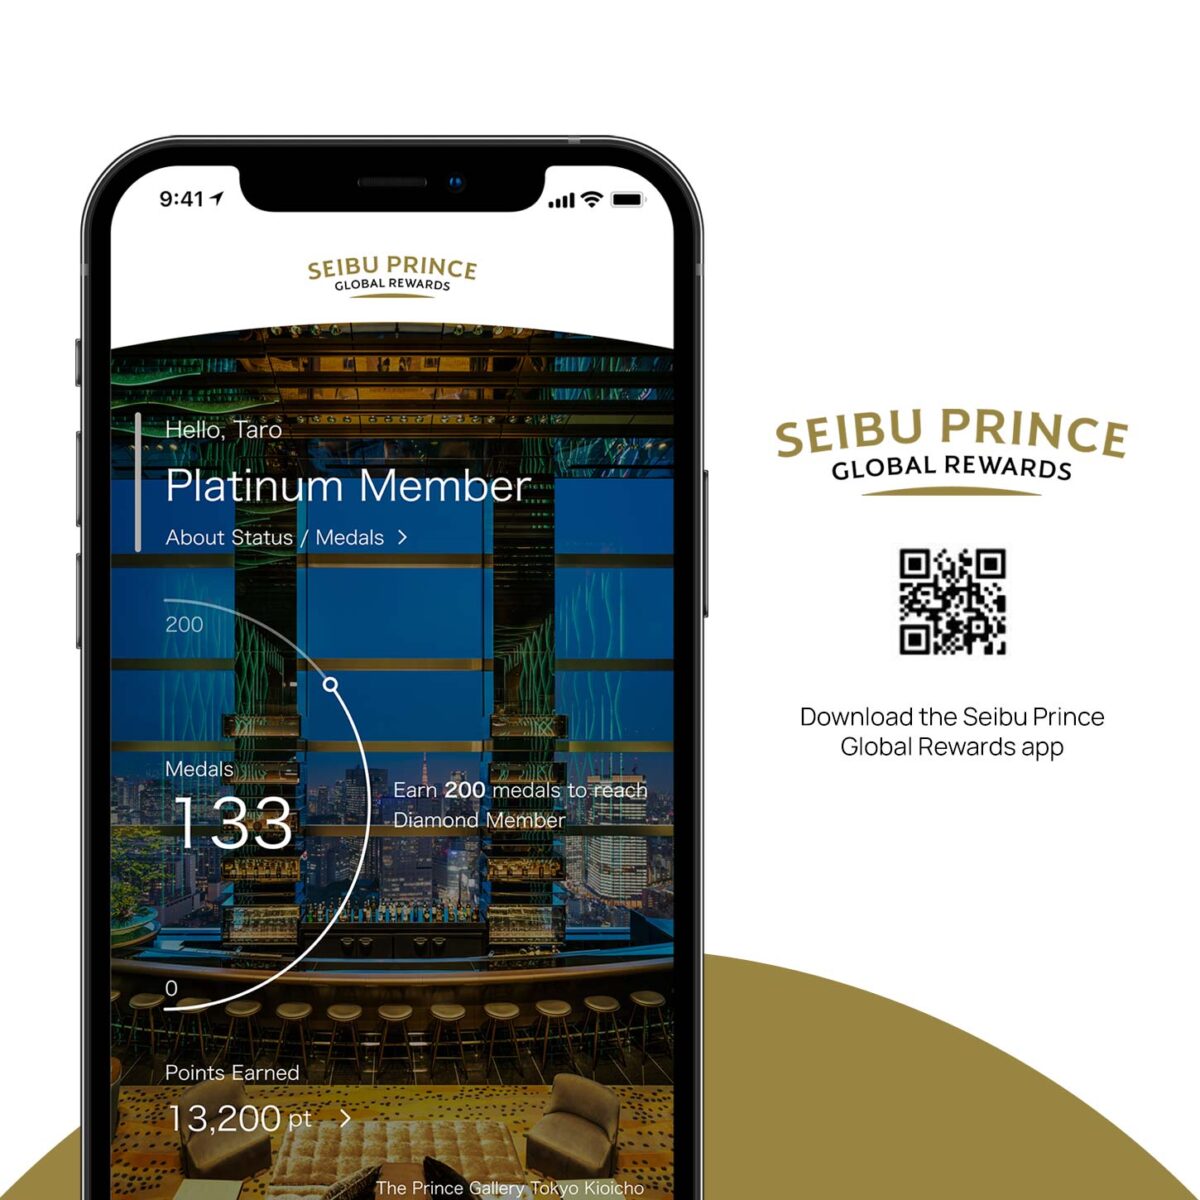 Seibu Prince Global Rewards App